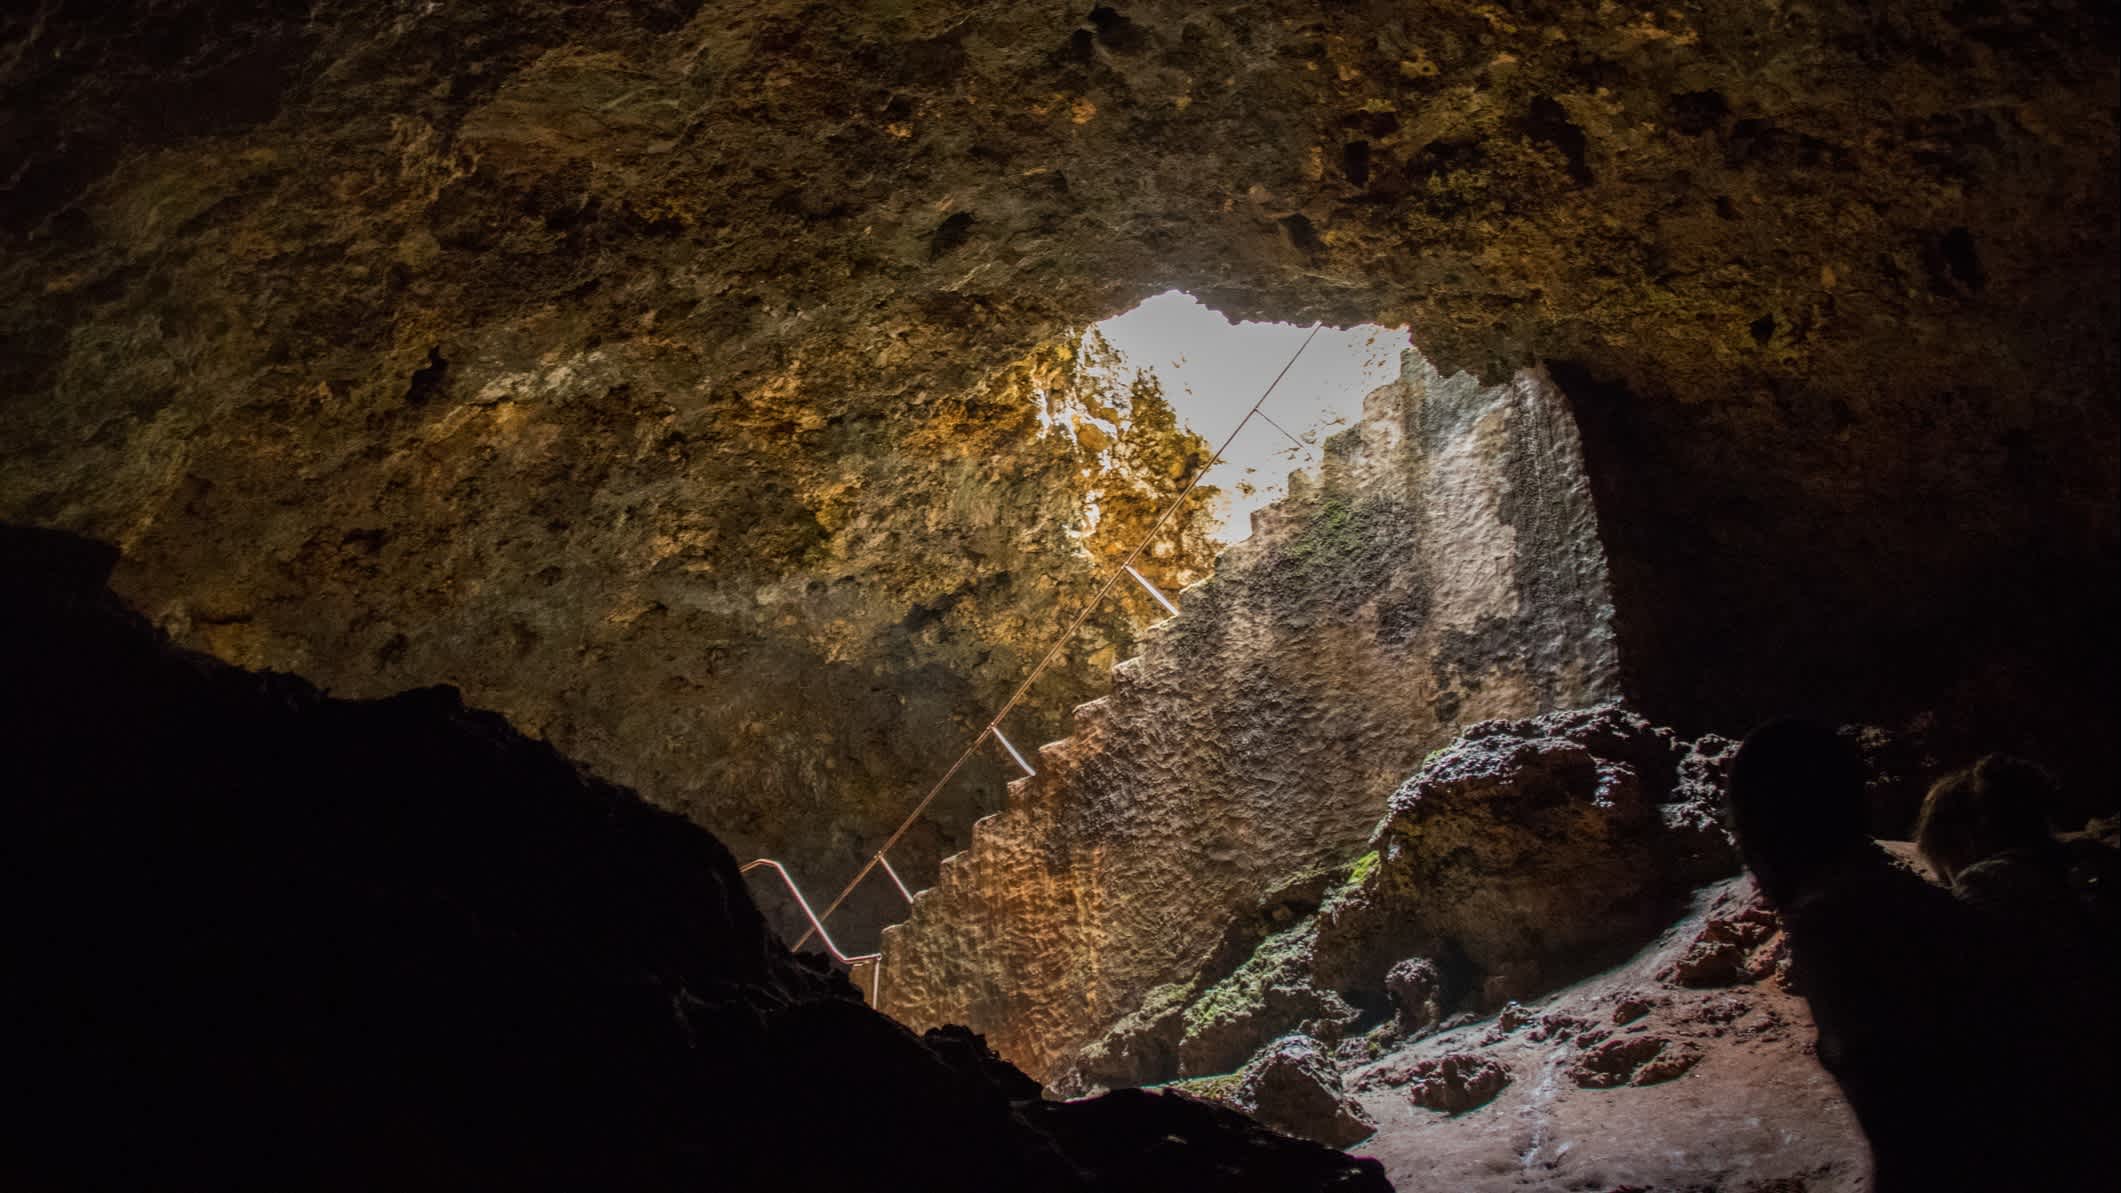 Vue de la grotte des esclaves à Zanzibar, Tanzanie

